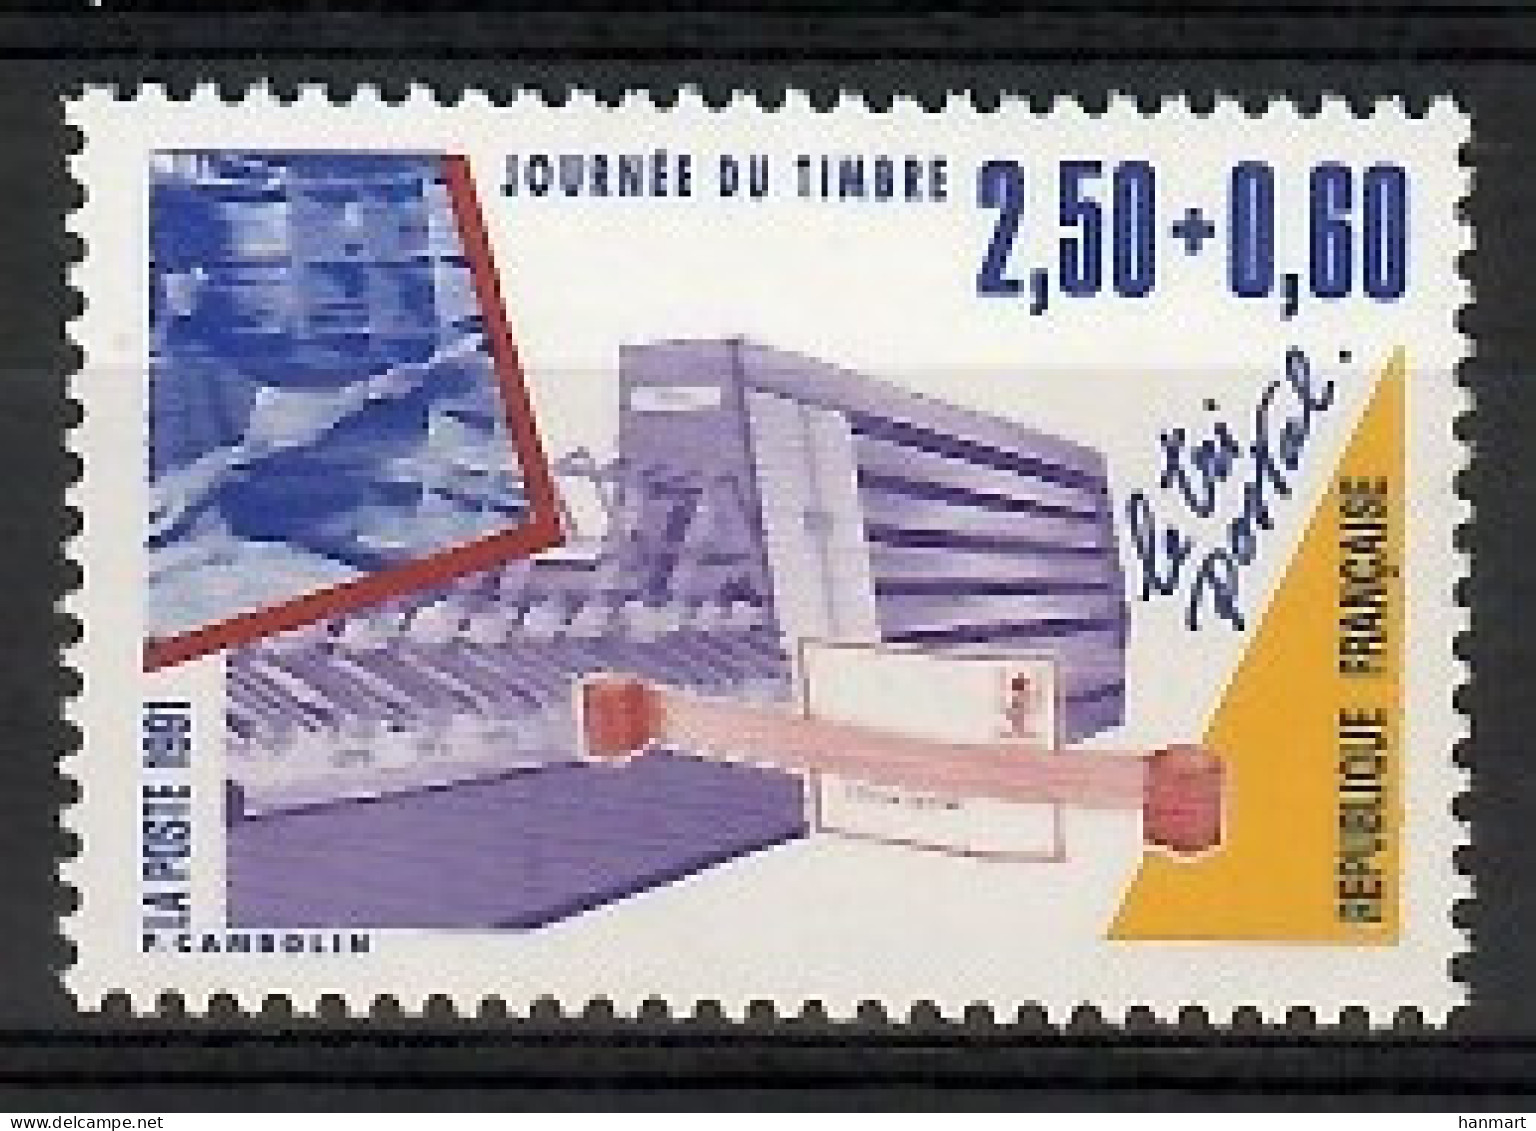 France 1991 Mi 2826b MNH  (ZE1 FRN2826b) - Journée Du Timbre